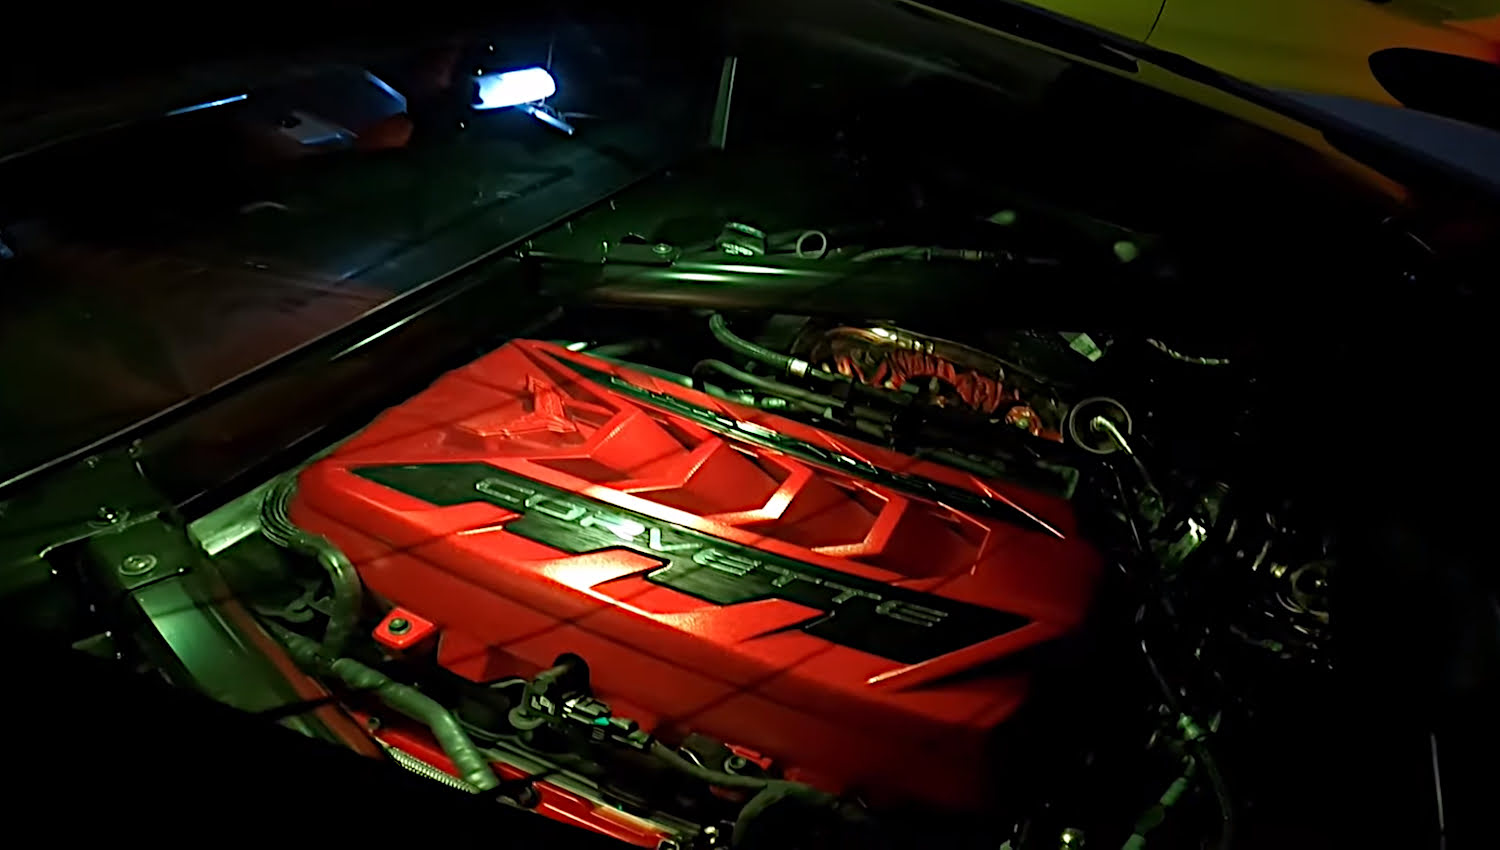 C8 Corvette Owner Shows DIY LED Lighting Project: Video